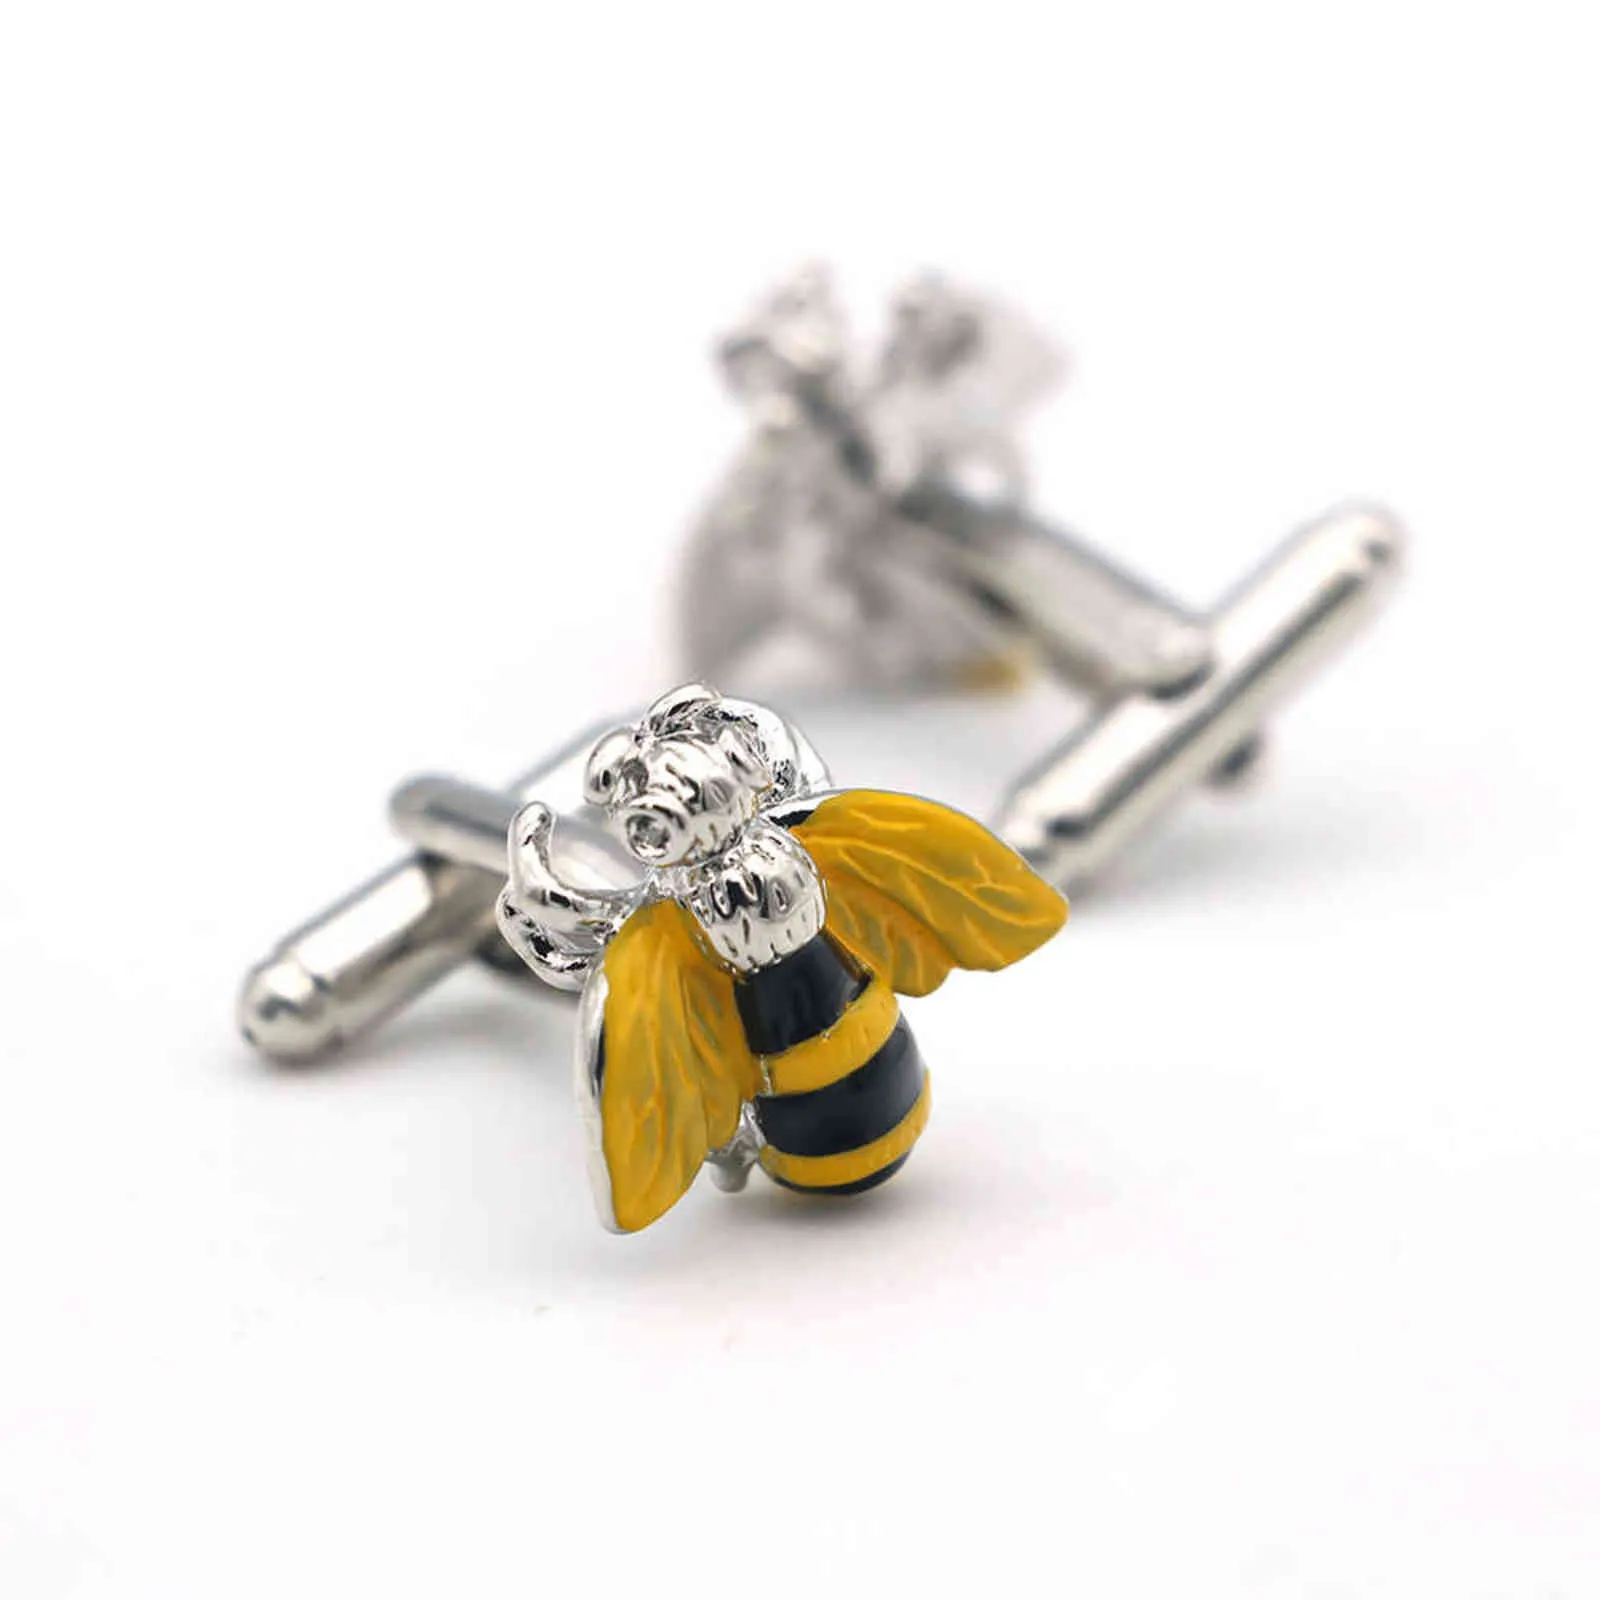 Abotoaduras de vespa men039s, cor amarela, design de abelha, material de cobre de qualidade, abotoaduras de moda, varejo inteiro g1126310a7324781